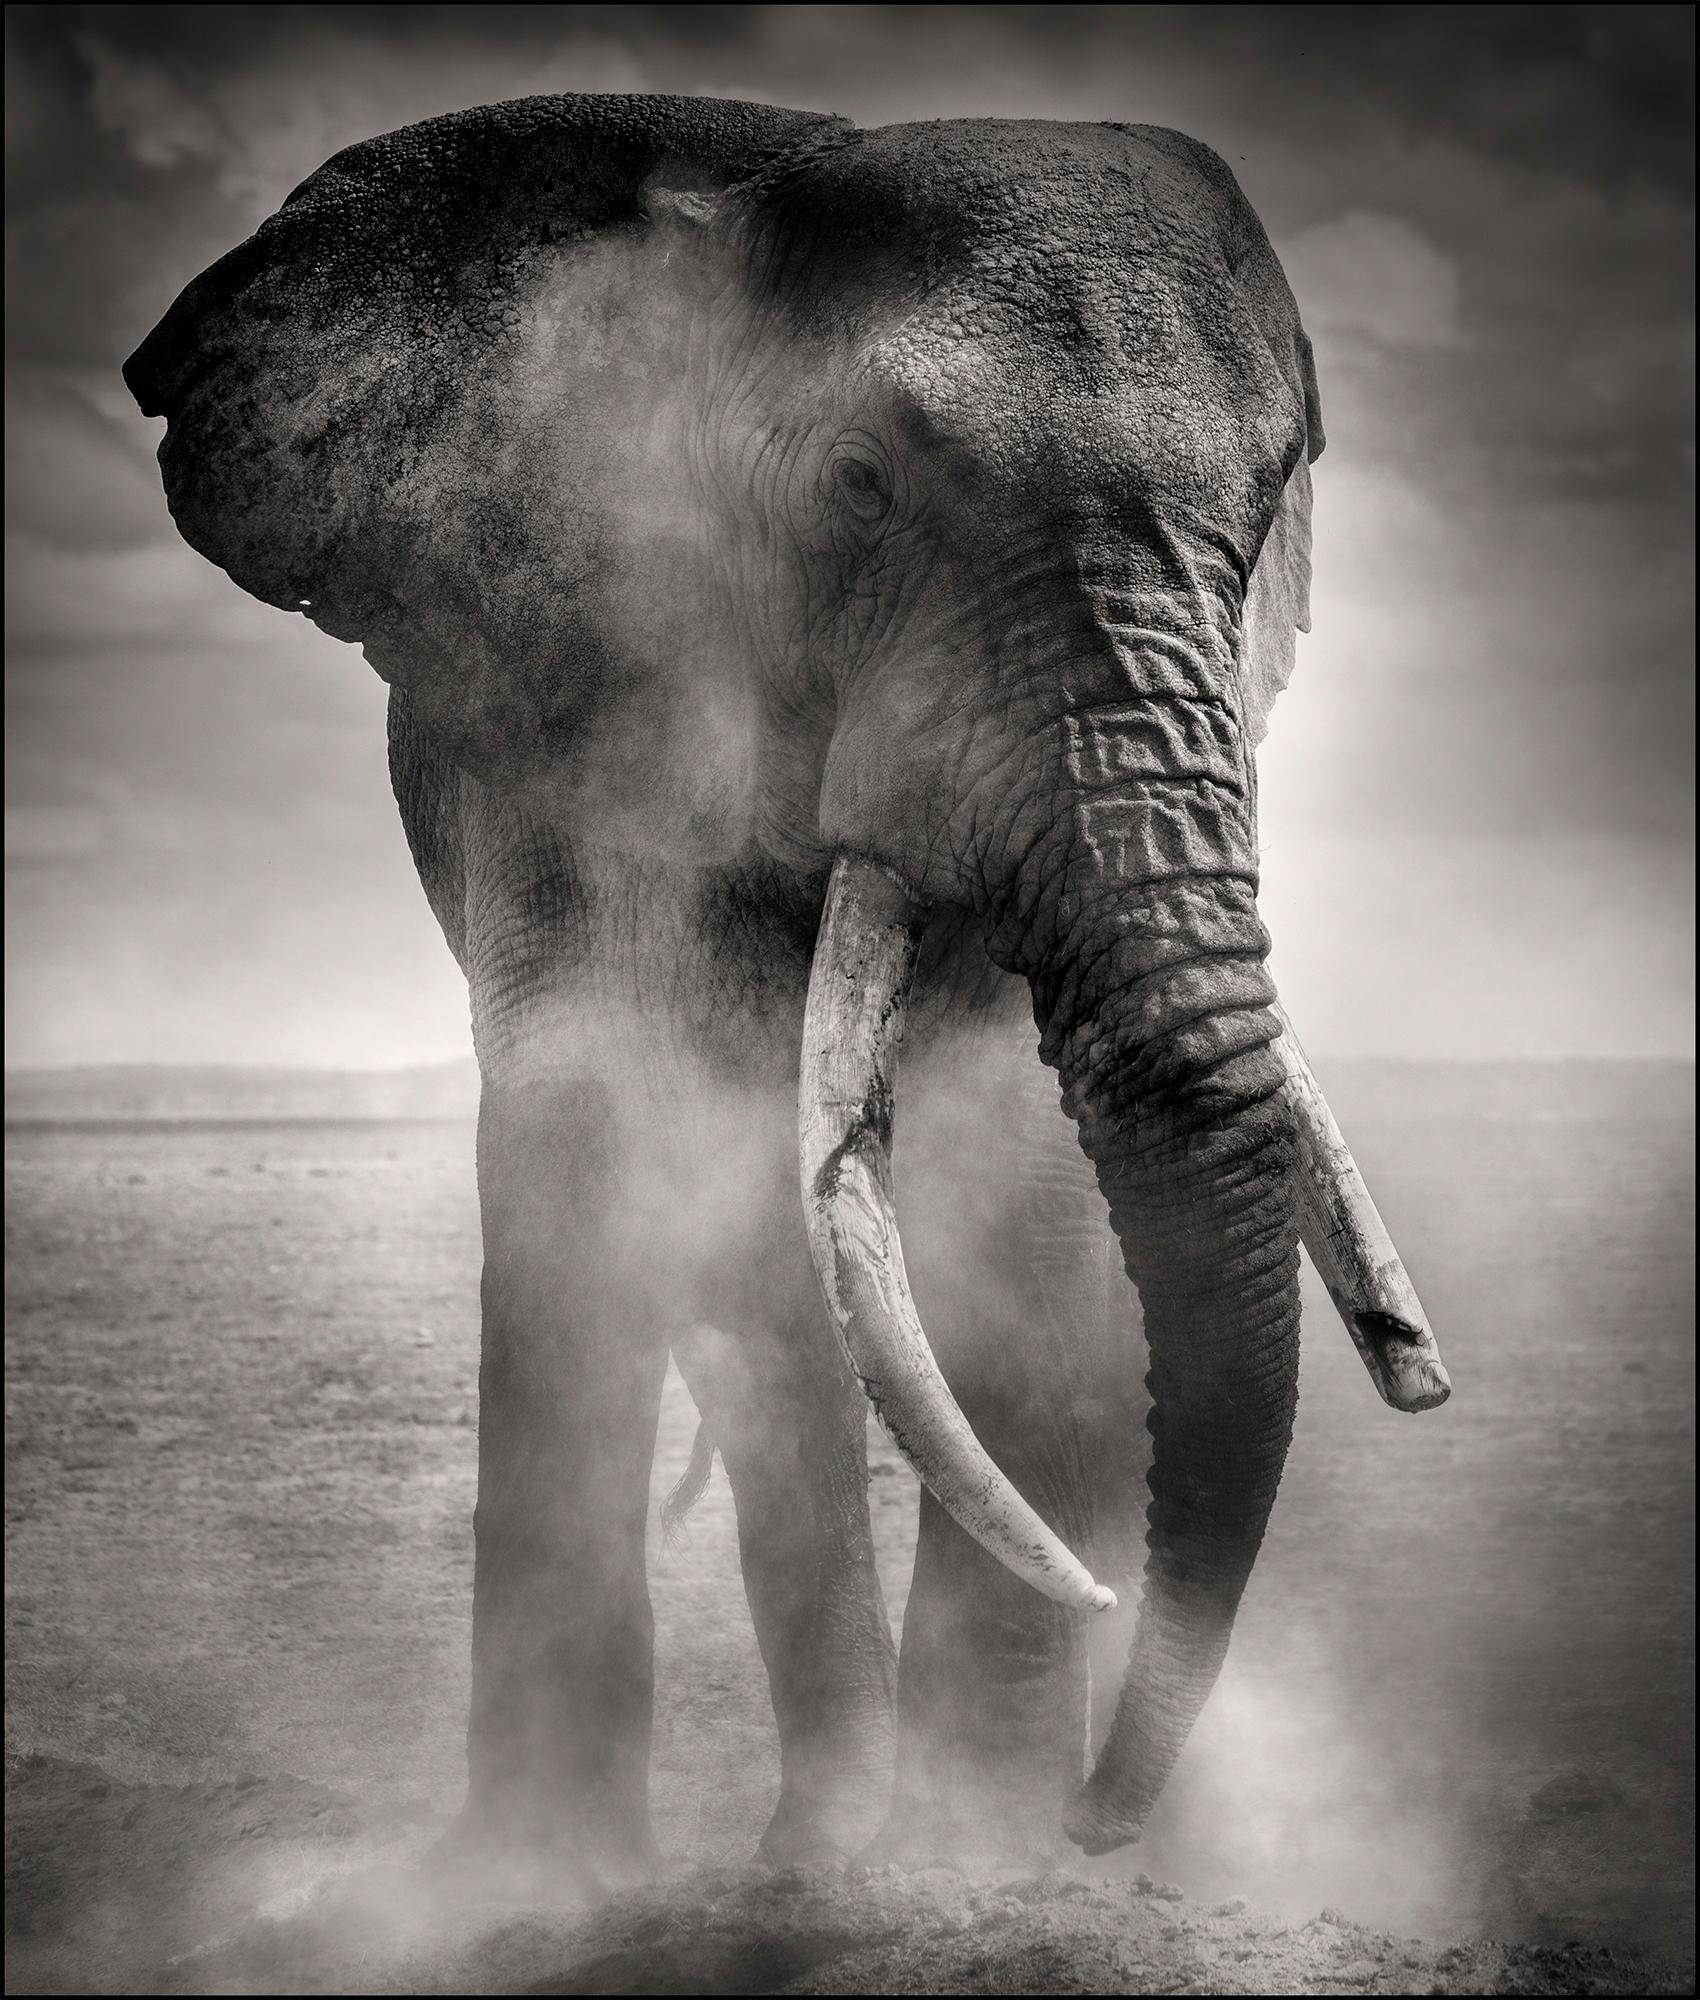 Joachim Schmeisser Black and White Photograph - Big Bull dusting, animal, wildlife, black and white photography, elephant